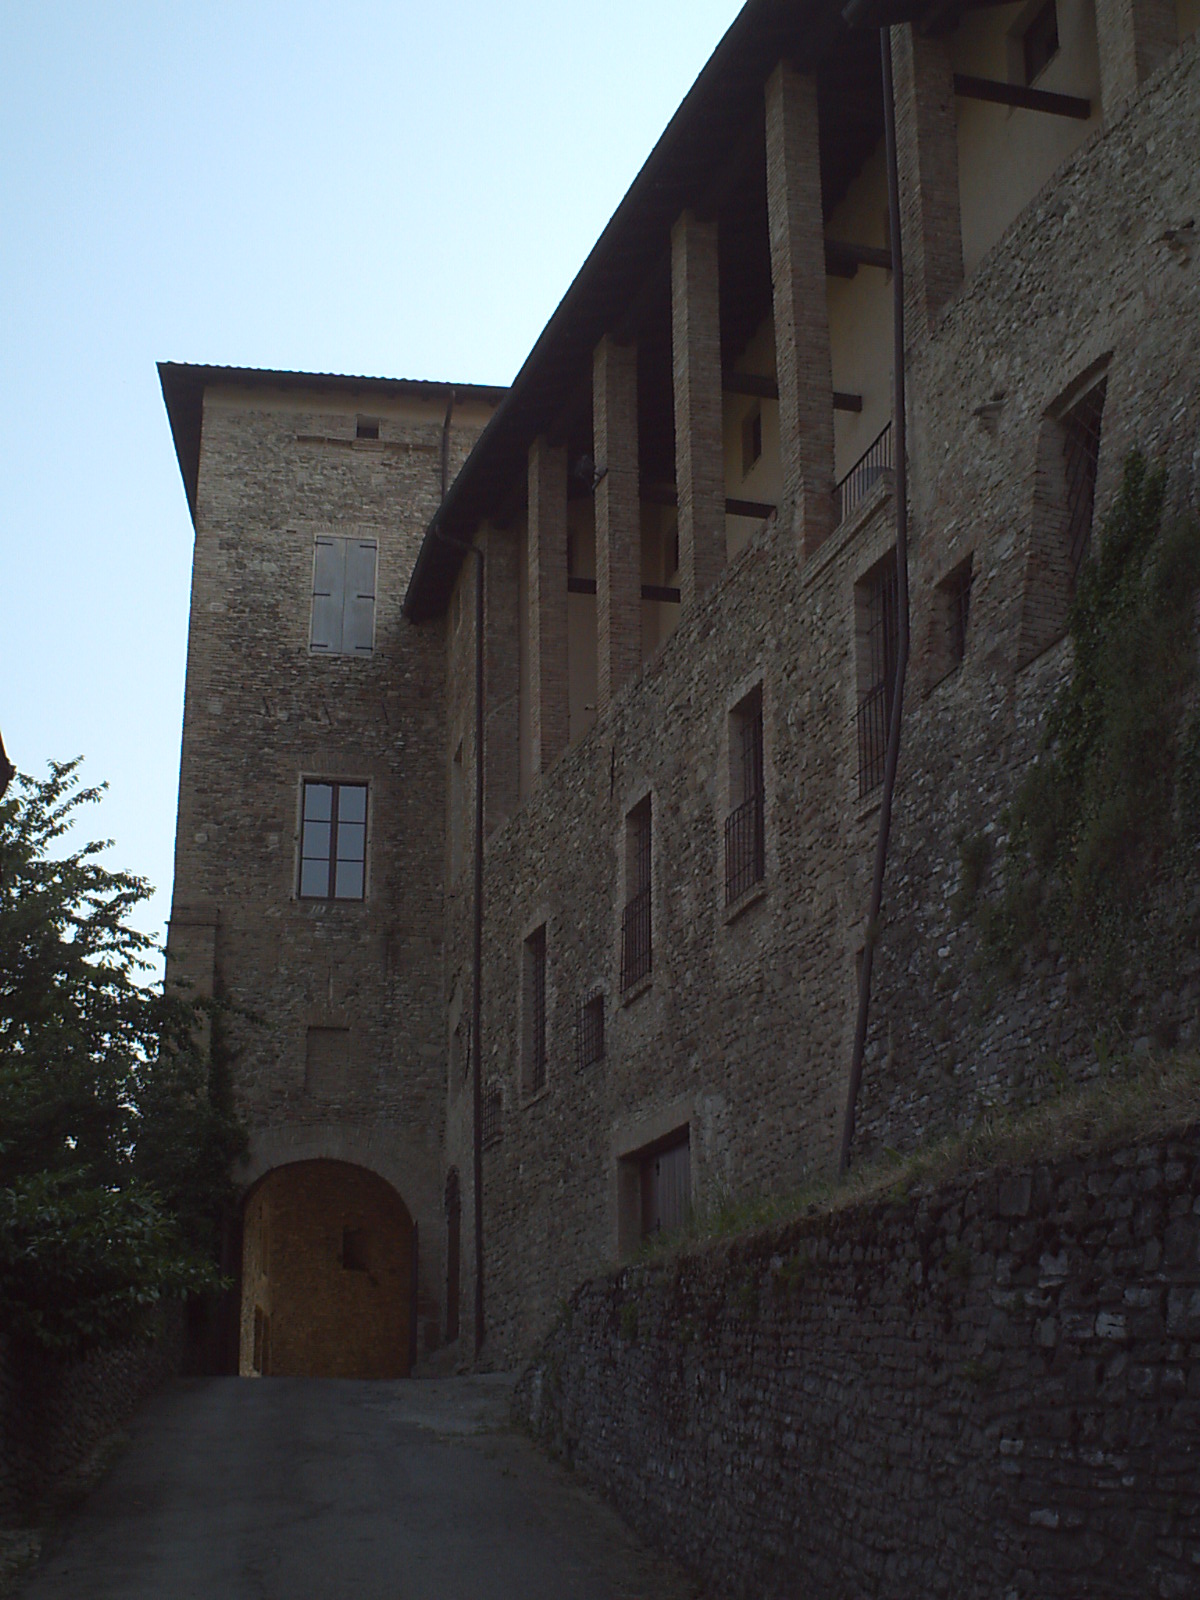 foto: https://upload.wikimedia.org/wikipedia/commons/9/9e/Ingresso_al_castello.JPG